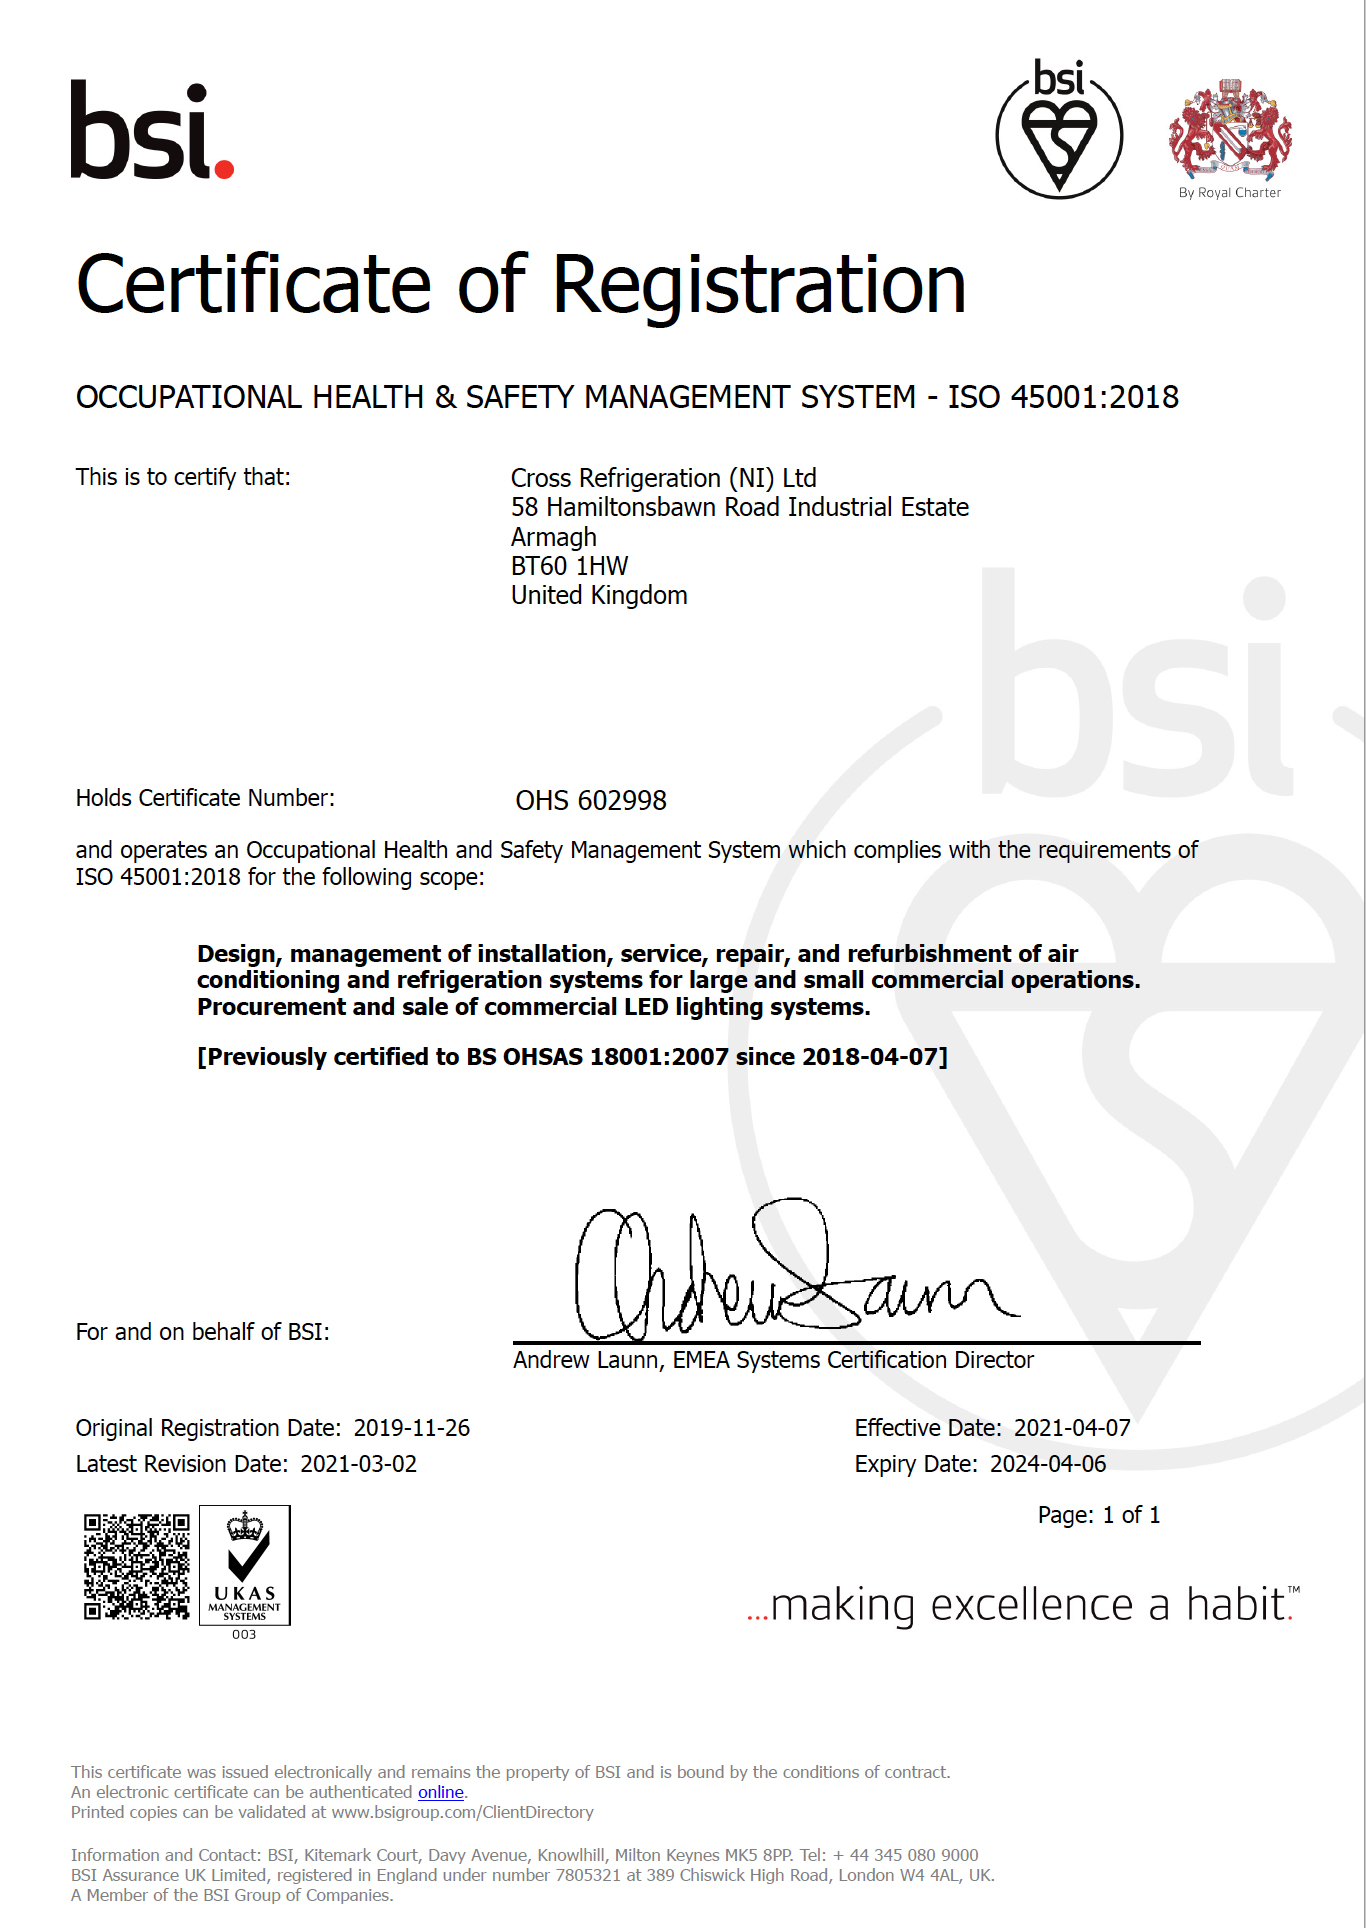 bsi-Certificate-of-Registration-ISO-45001